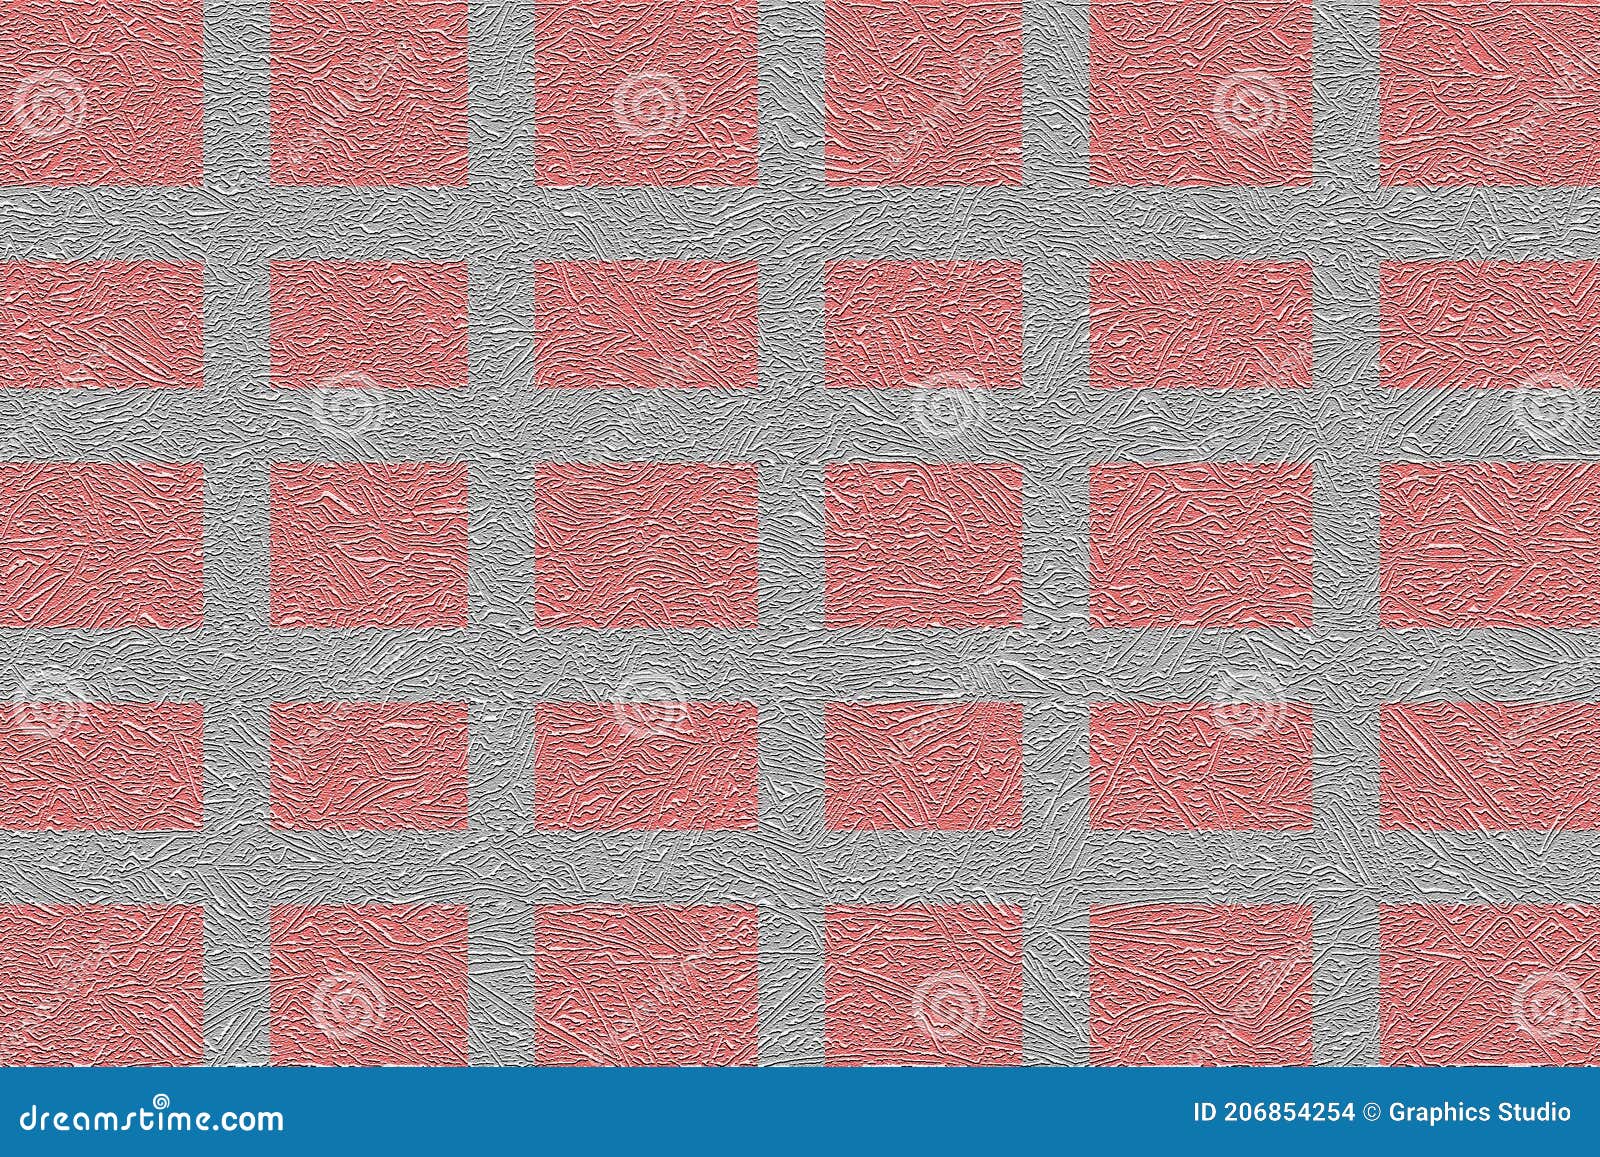 Red block wallpaper stock photo. Image of pink, design - 206854254